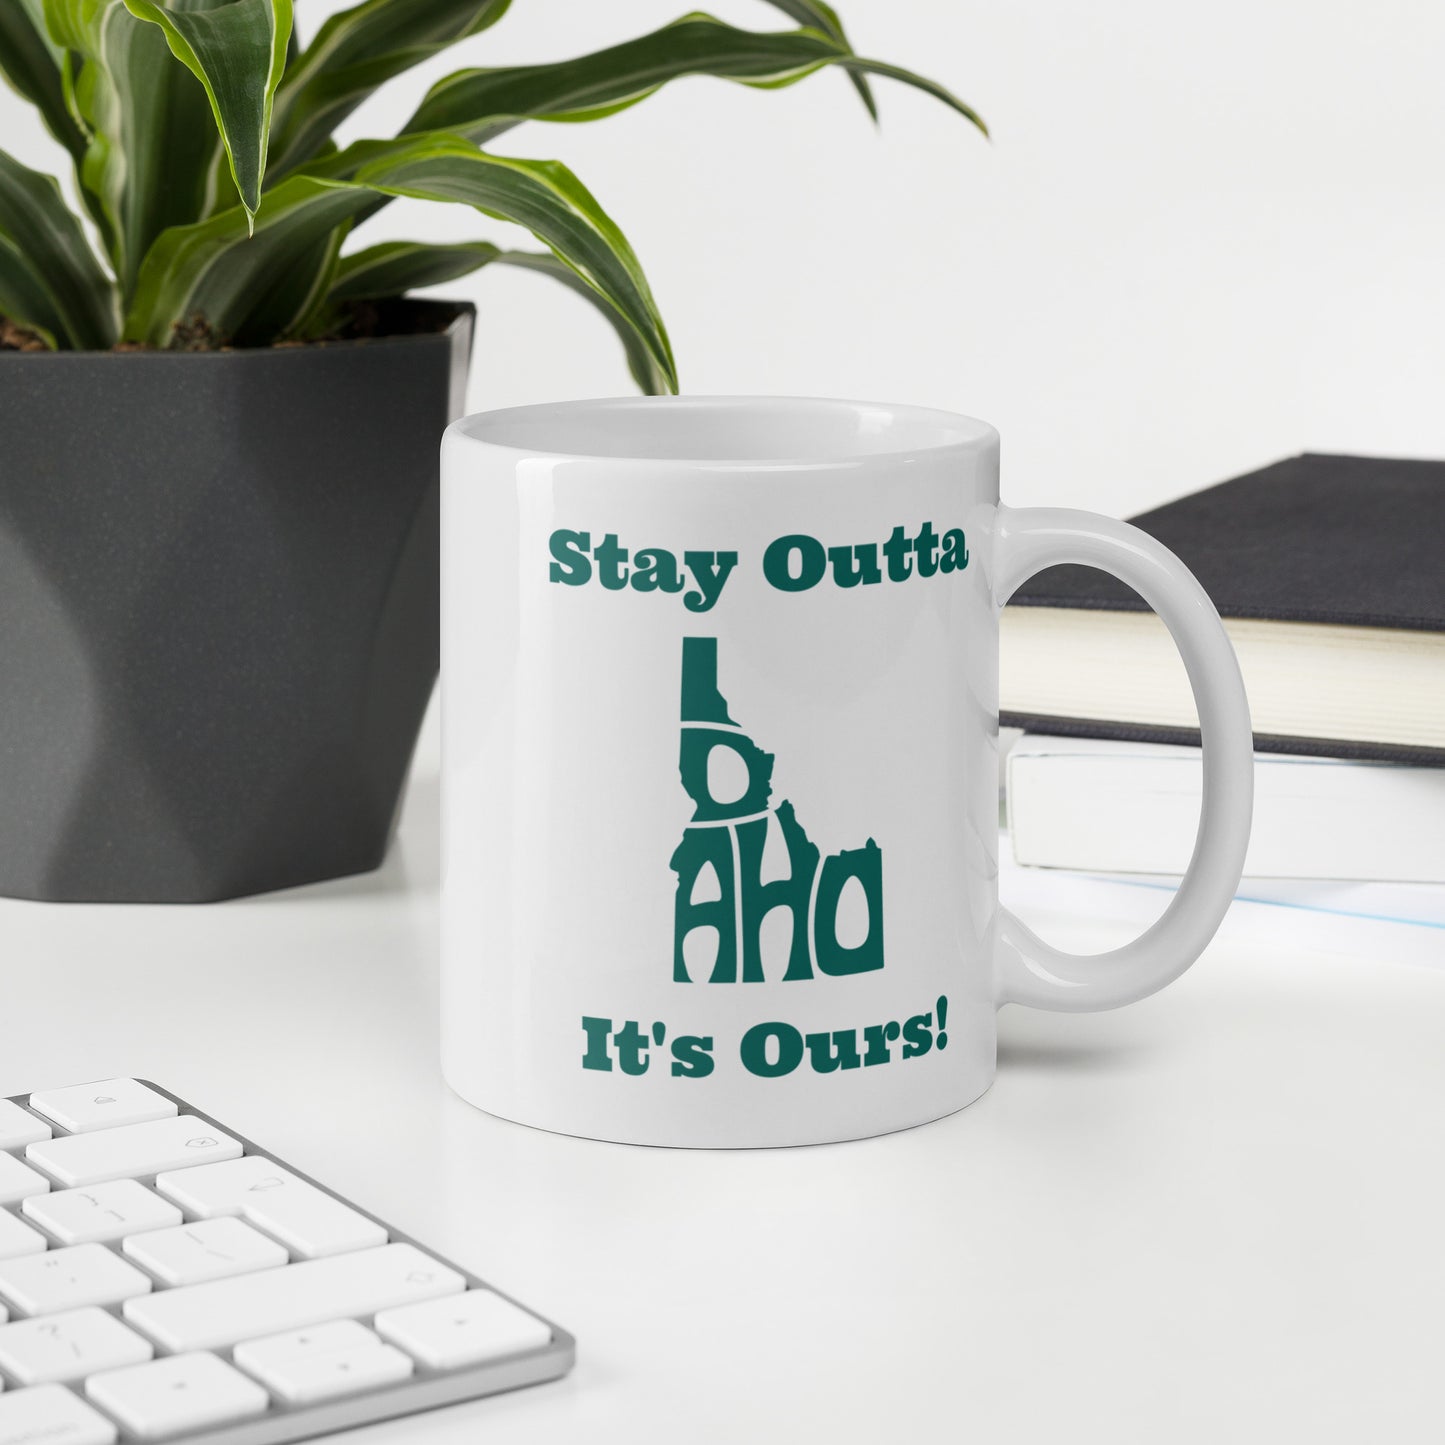 Stay Outta Idaho - Dark Green Font - White Glossy Mug